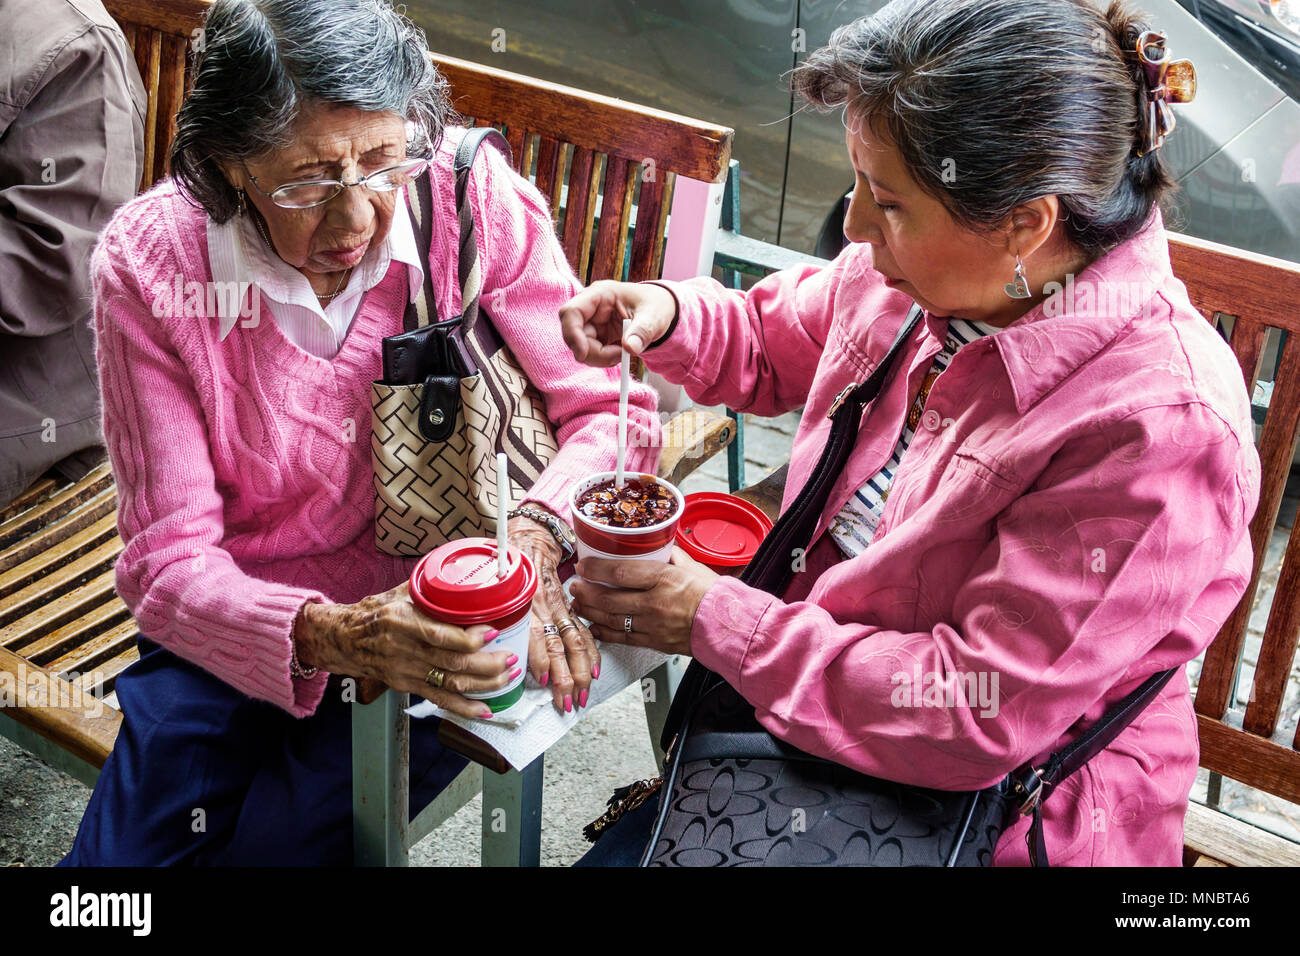 Mexiko-Stadt, Mexikanisch, Hispanic, Coyoacan, Cafe El Jarocho, Kaffeehaus, weibliche Frauen, Senioren Bürger, Eistee MX180308061 Stockfoto